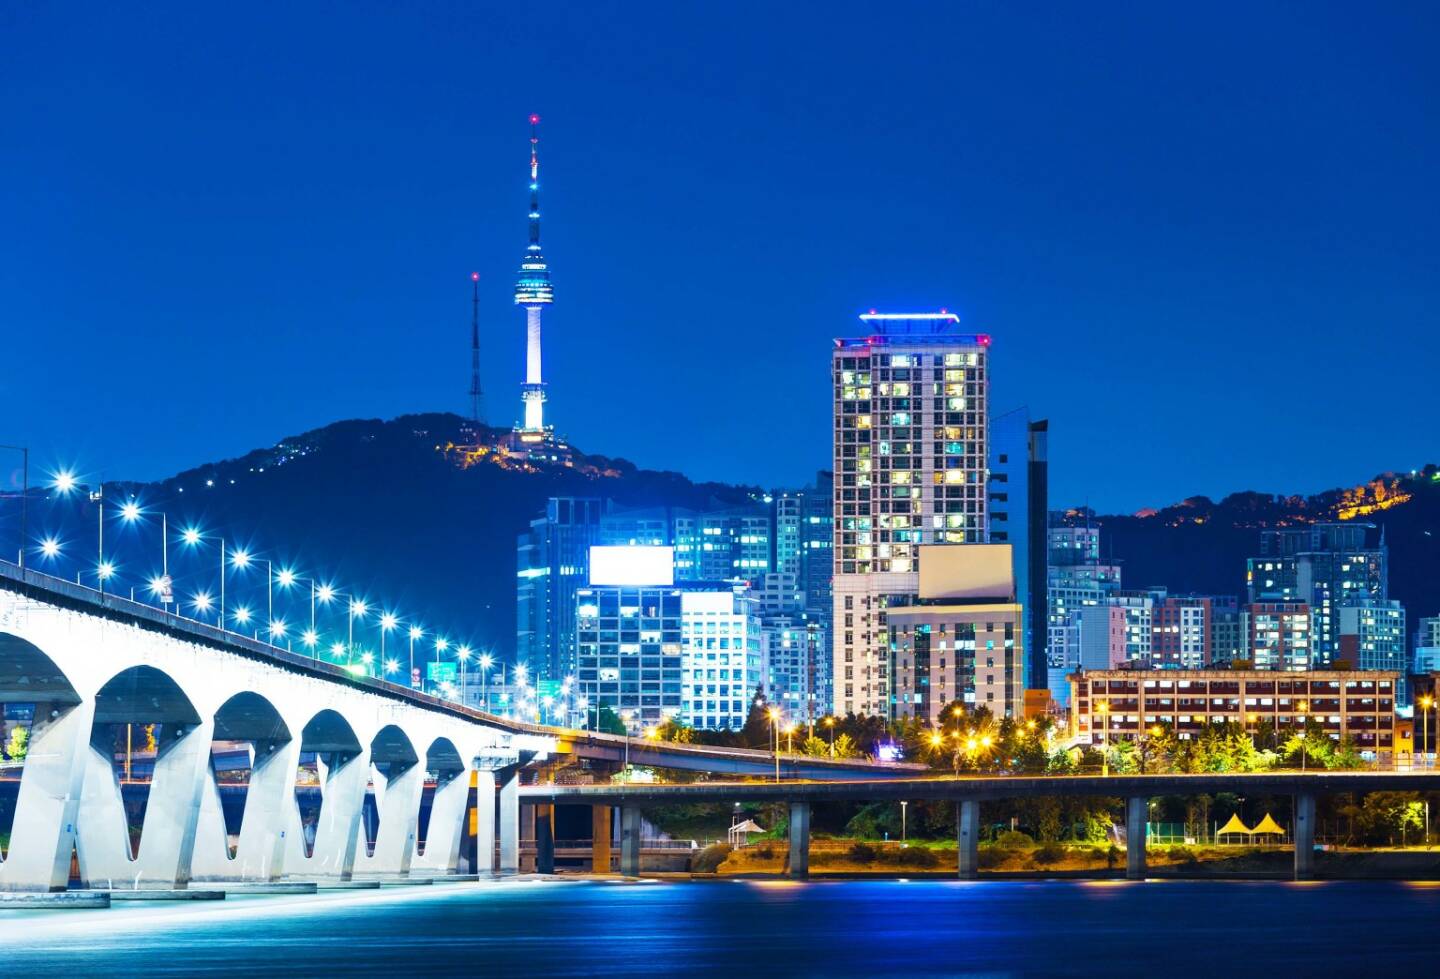 Seoul, Korea, http://www.shutterstock.com/de/pic-169750820/stock-photo-han-river-and-bridge-in-seoul.html, 